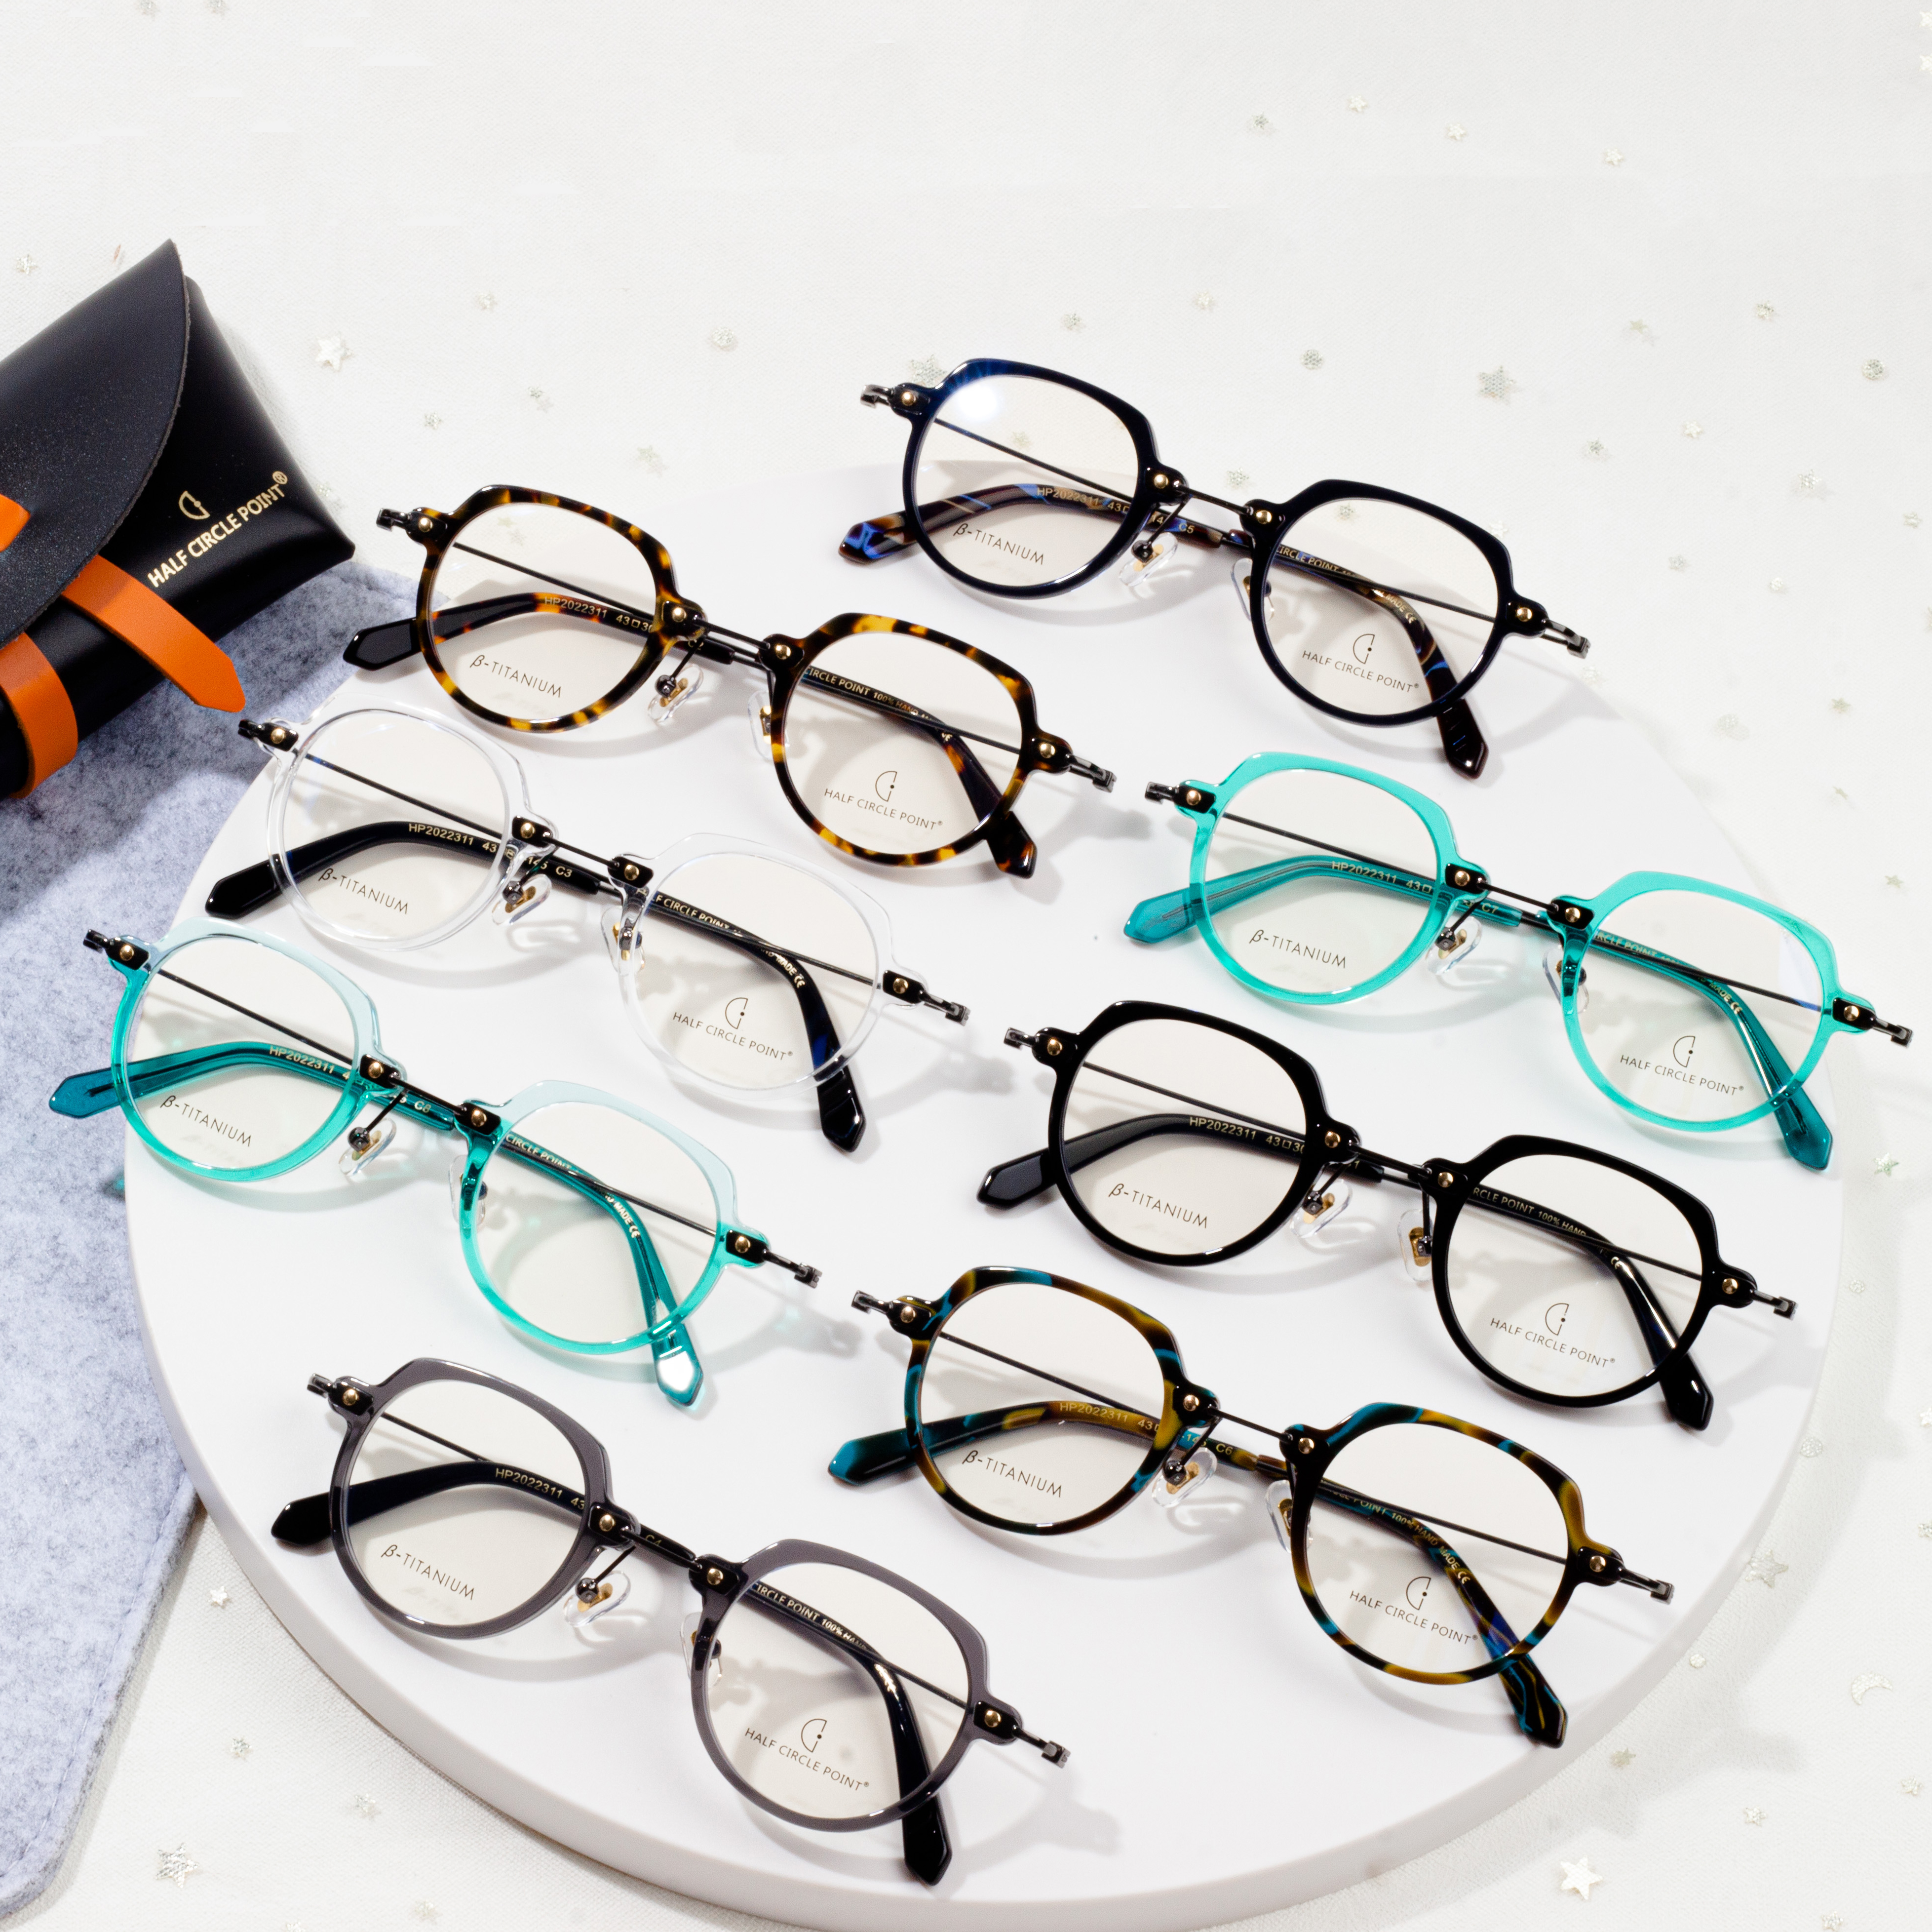 Hot sale Cheap Eyeglass Frames - Full rim small size unisex eyeglasses frames – HJ EYEWEAR